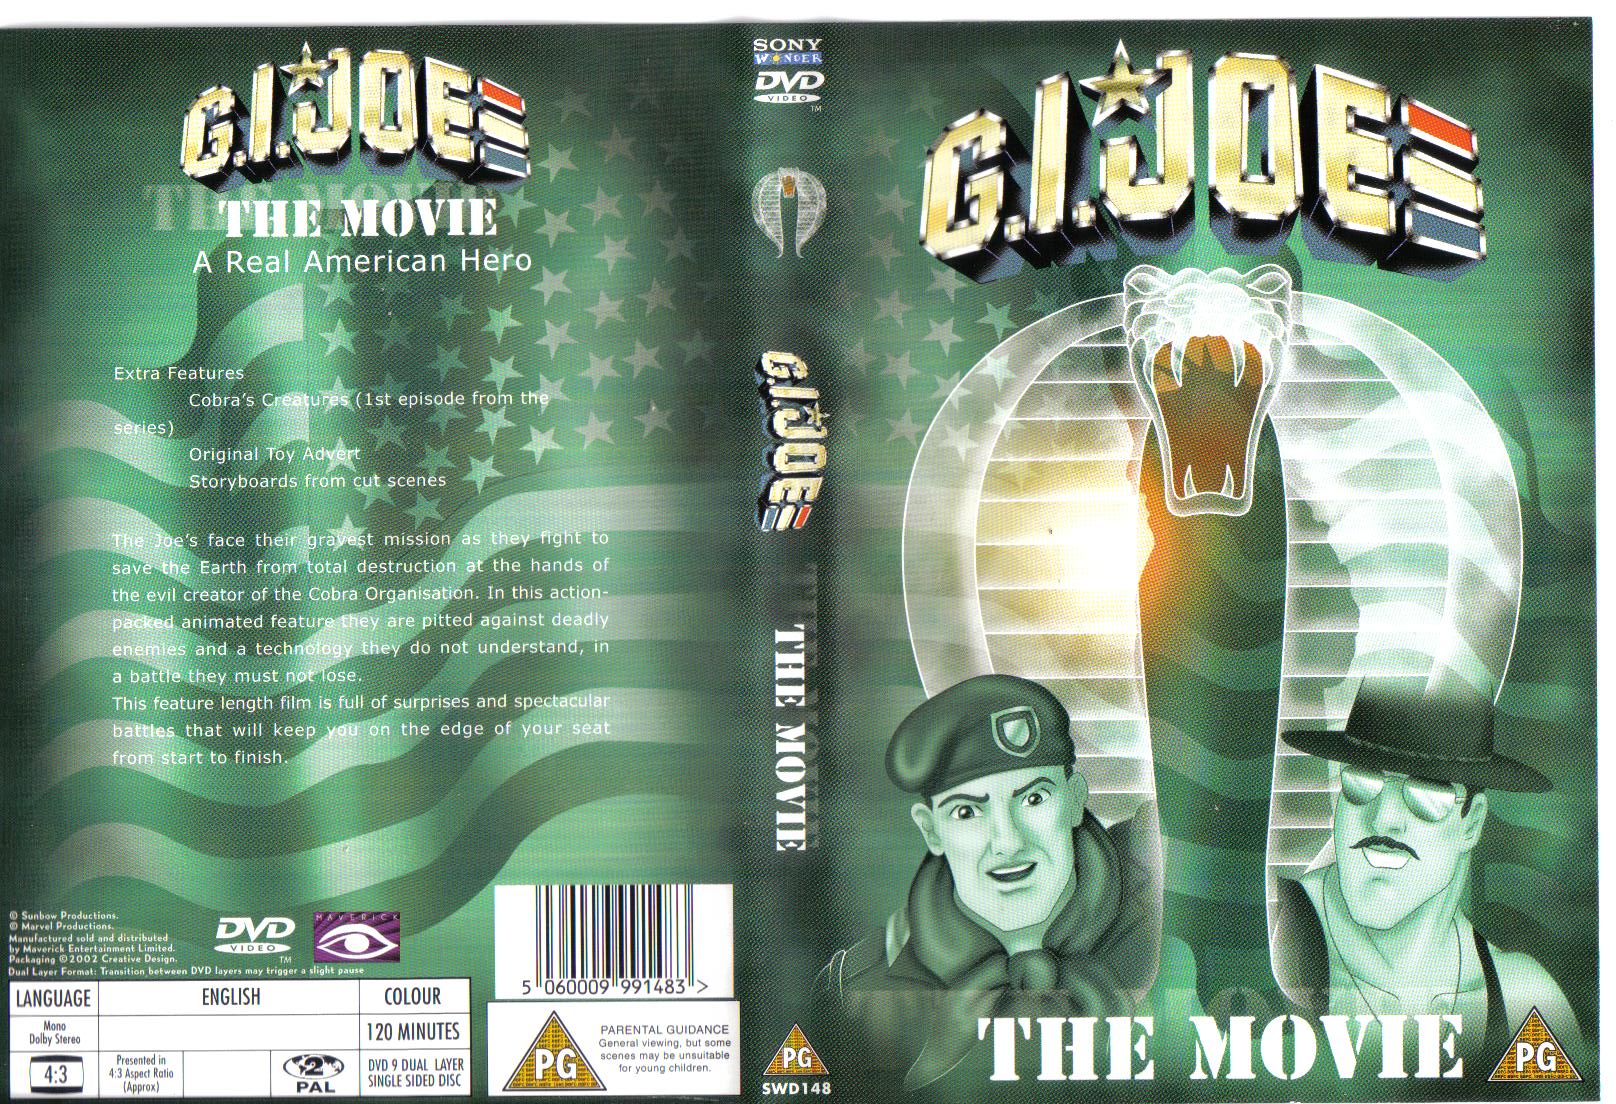 Jaquette DVD GI Joe the movie